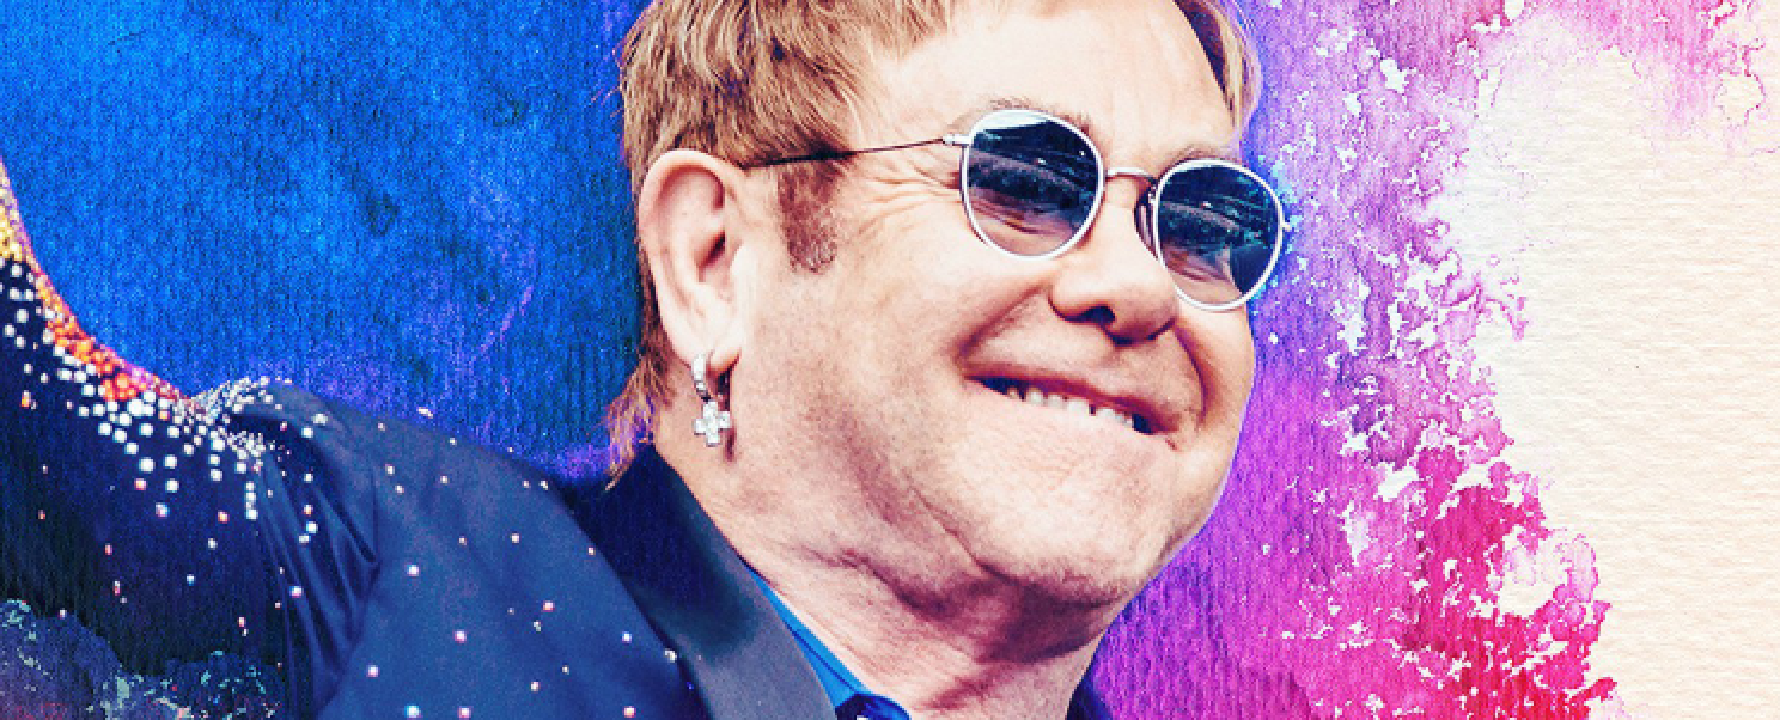 Fotografia promocional de Elton John.